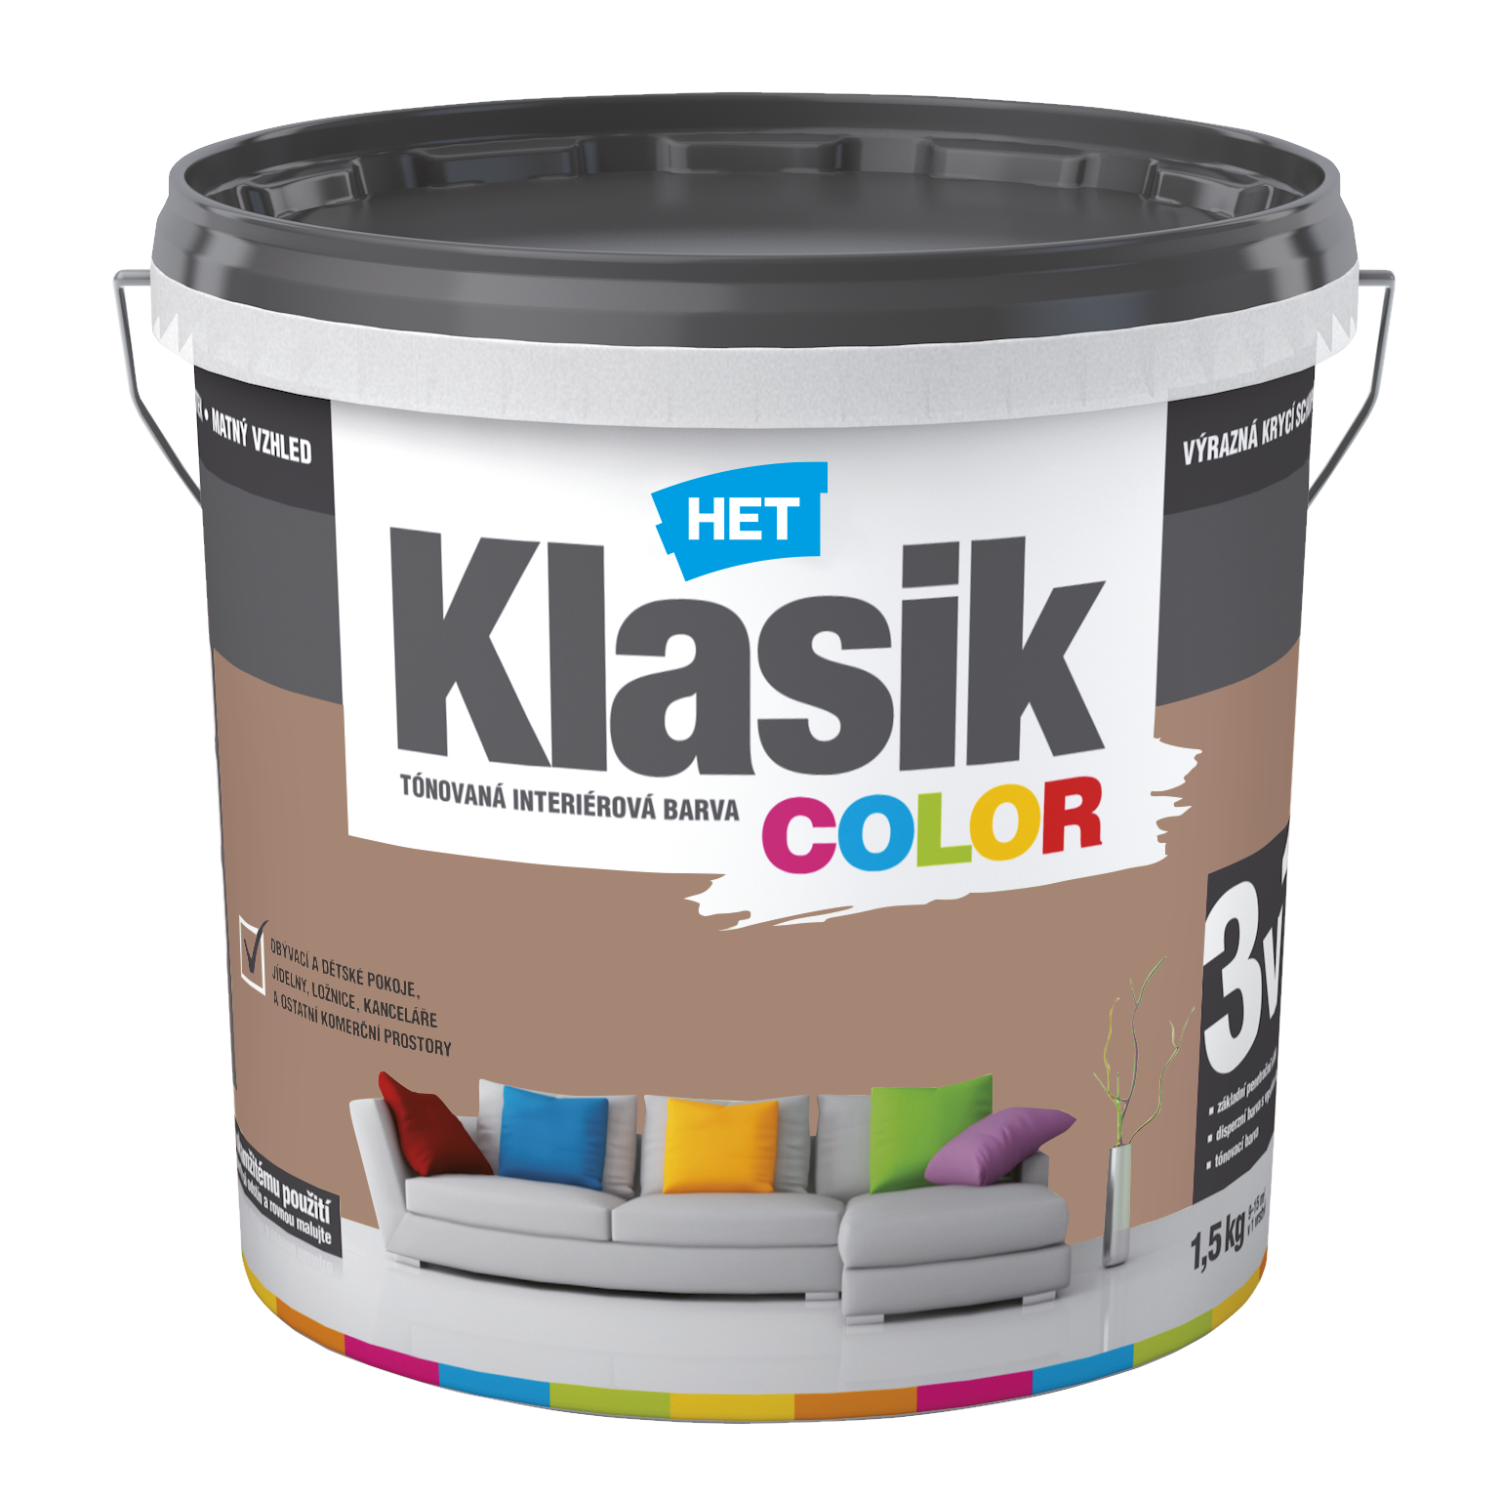 HET Klasik COLOR tónovaná interiérová akrylátová disperzná oteruvzdorná farba 1,5 kg, KC0267 - hnedý karamelový